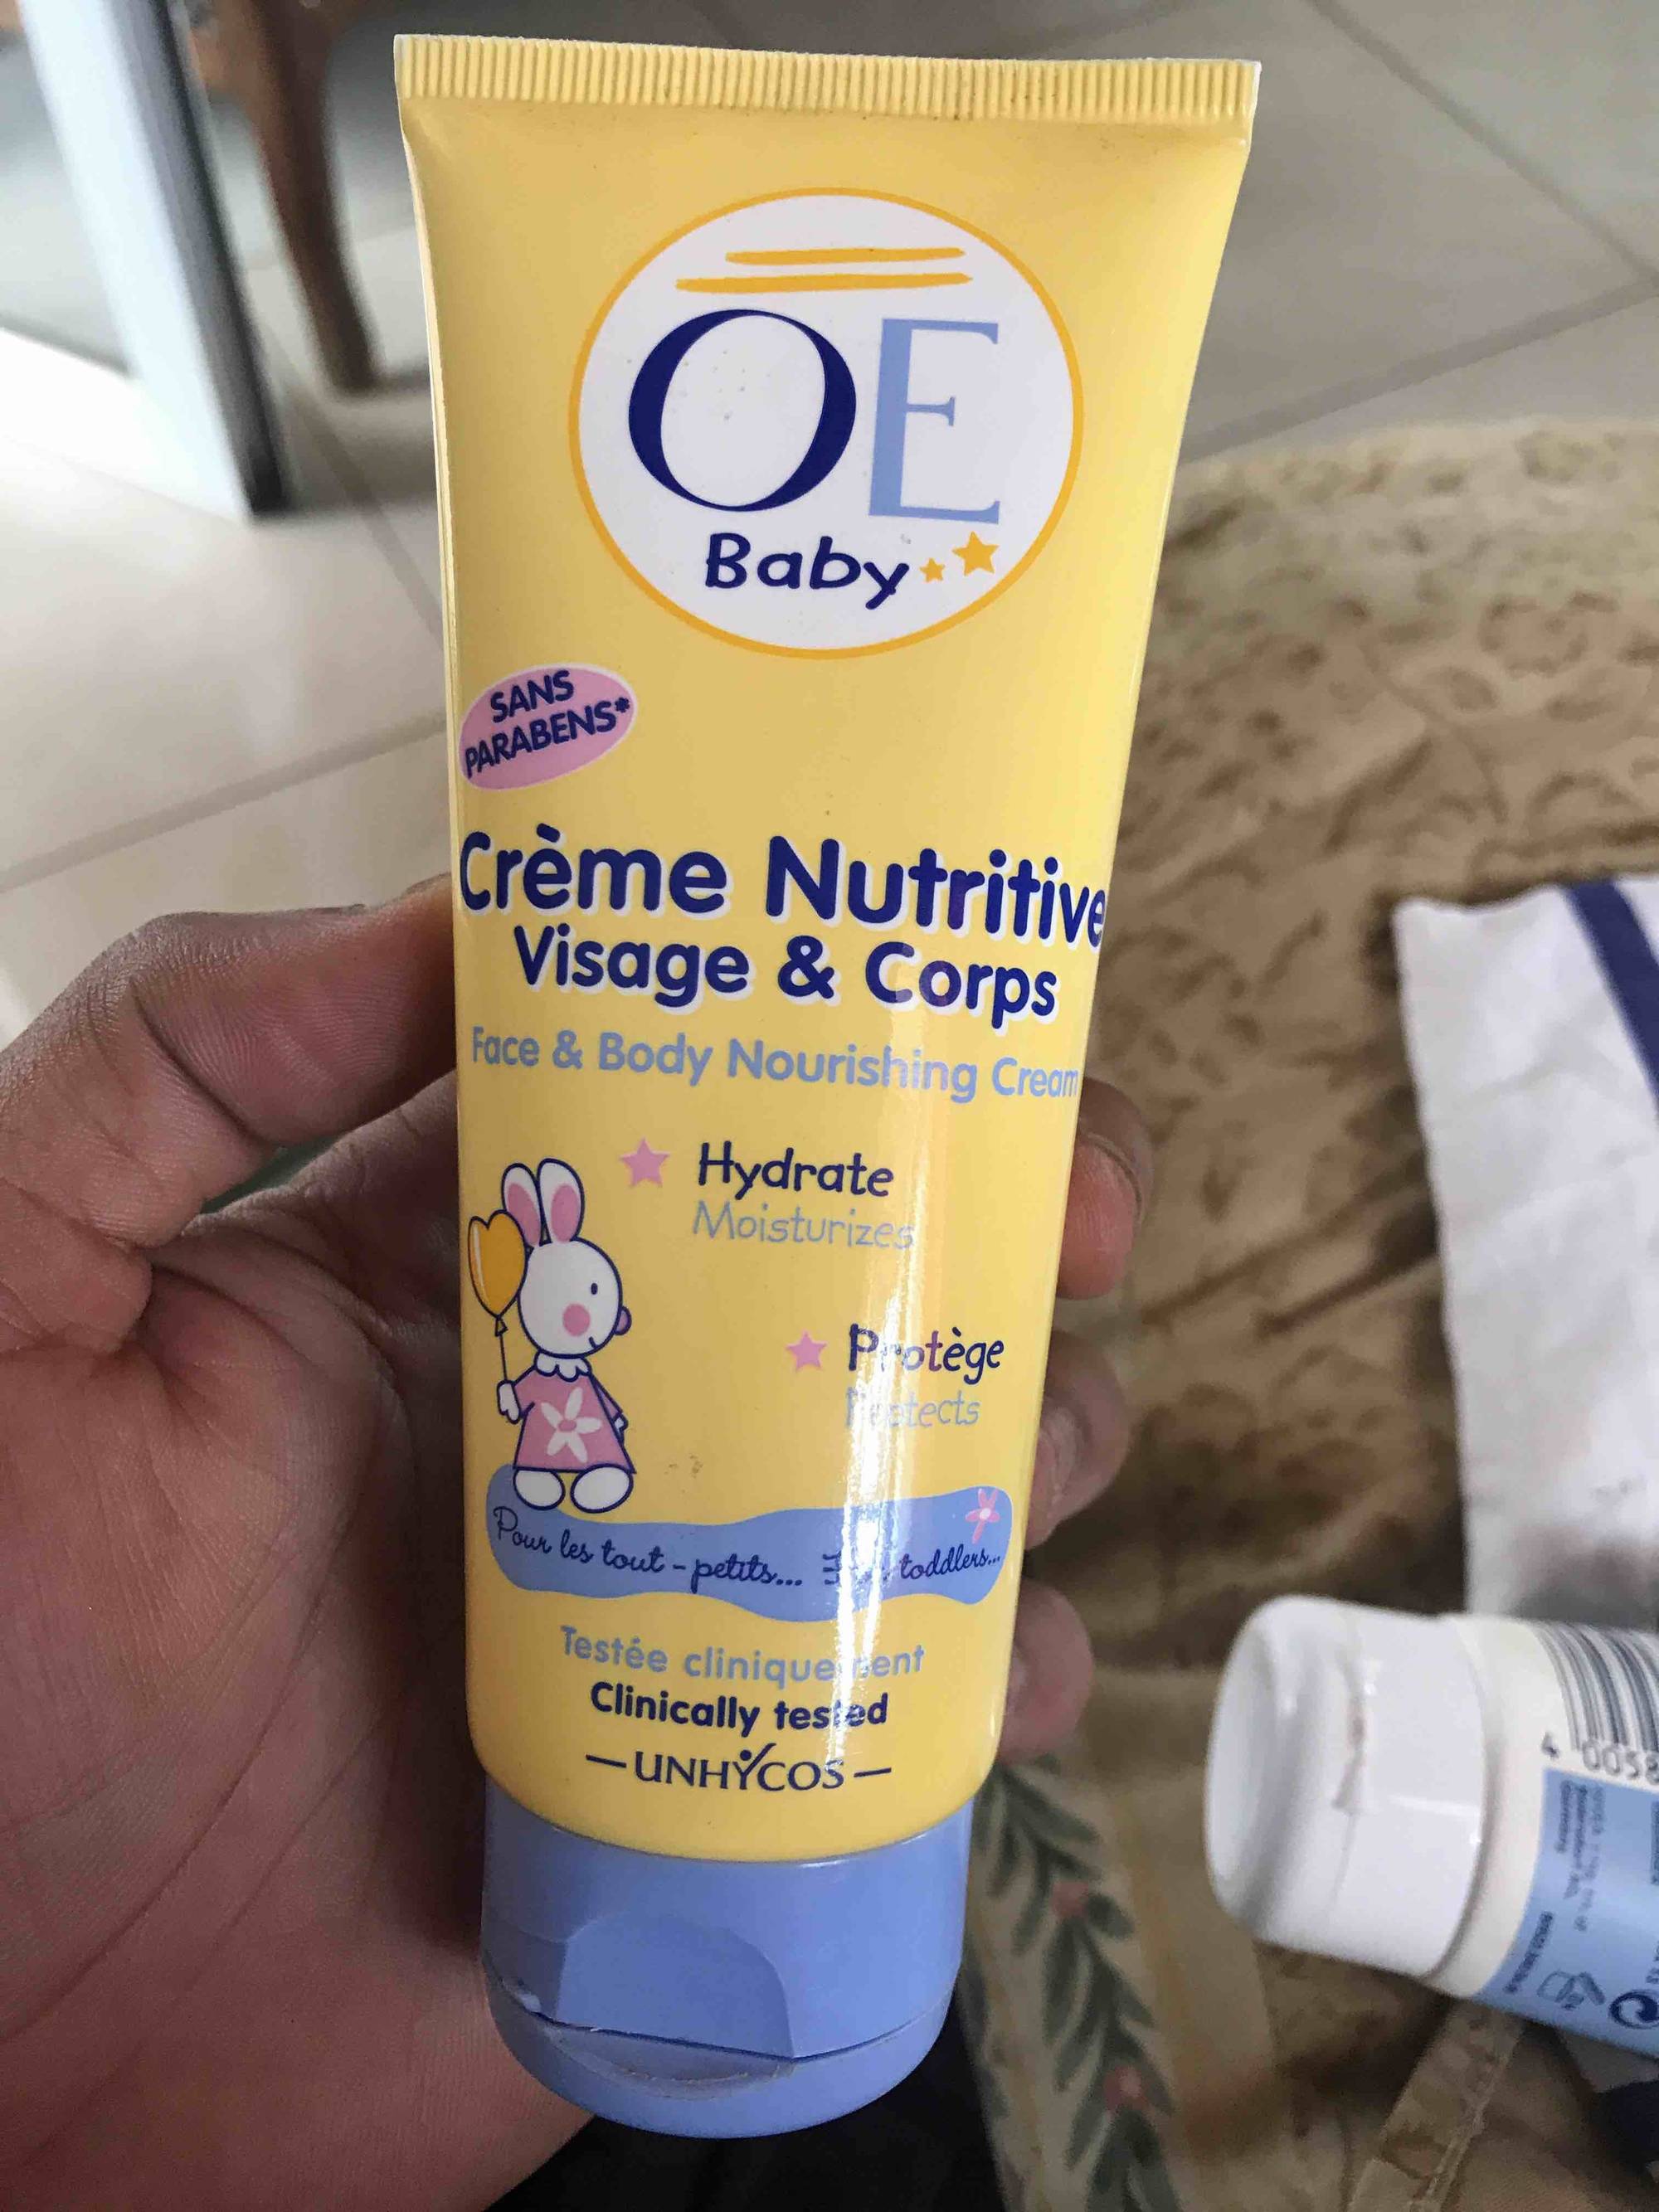 OE - Baby - Crème nutritive visage & corps